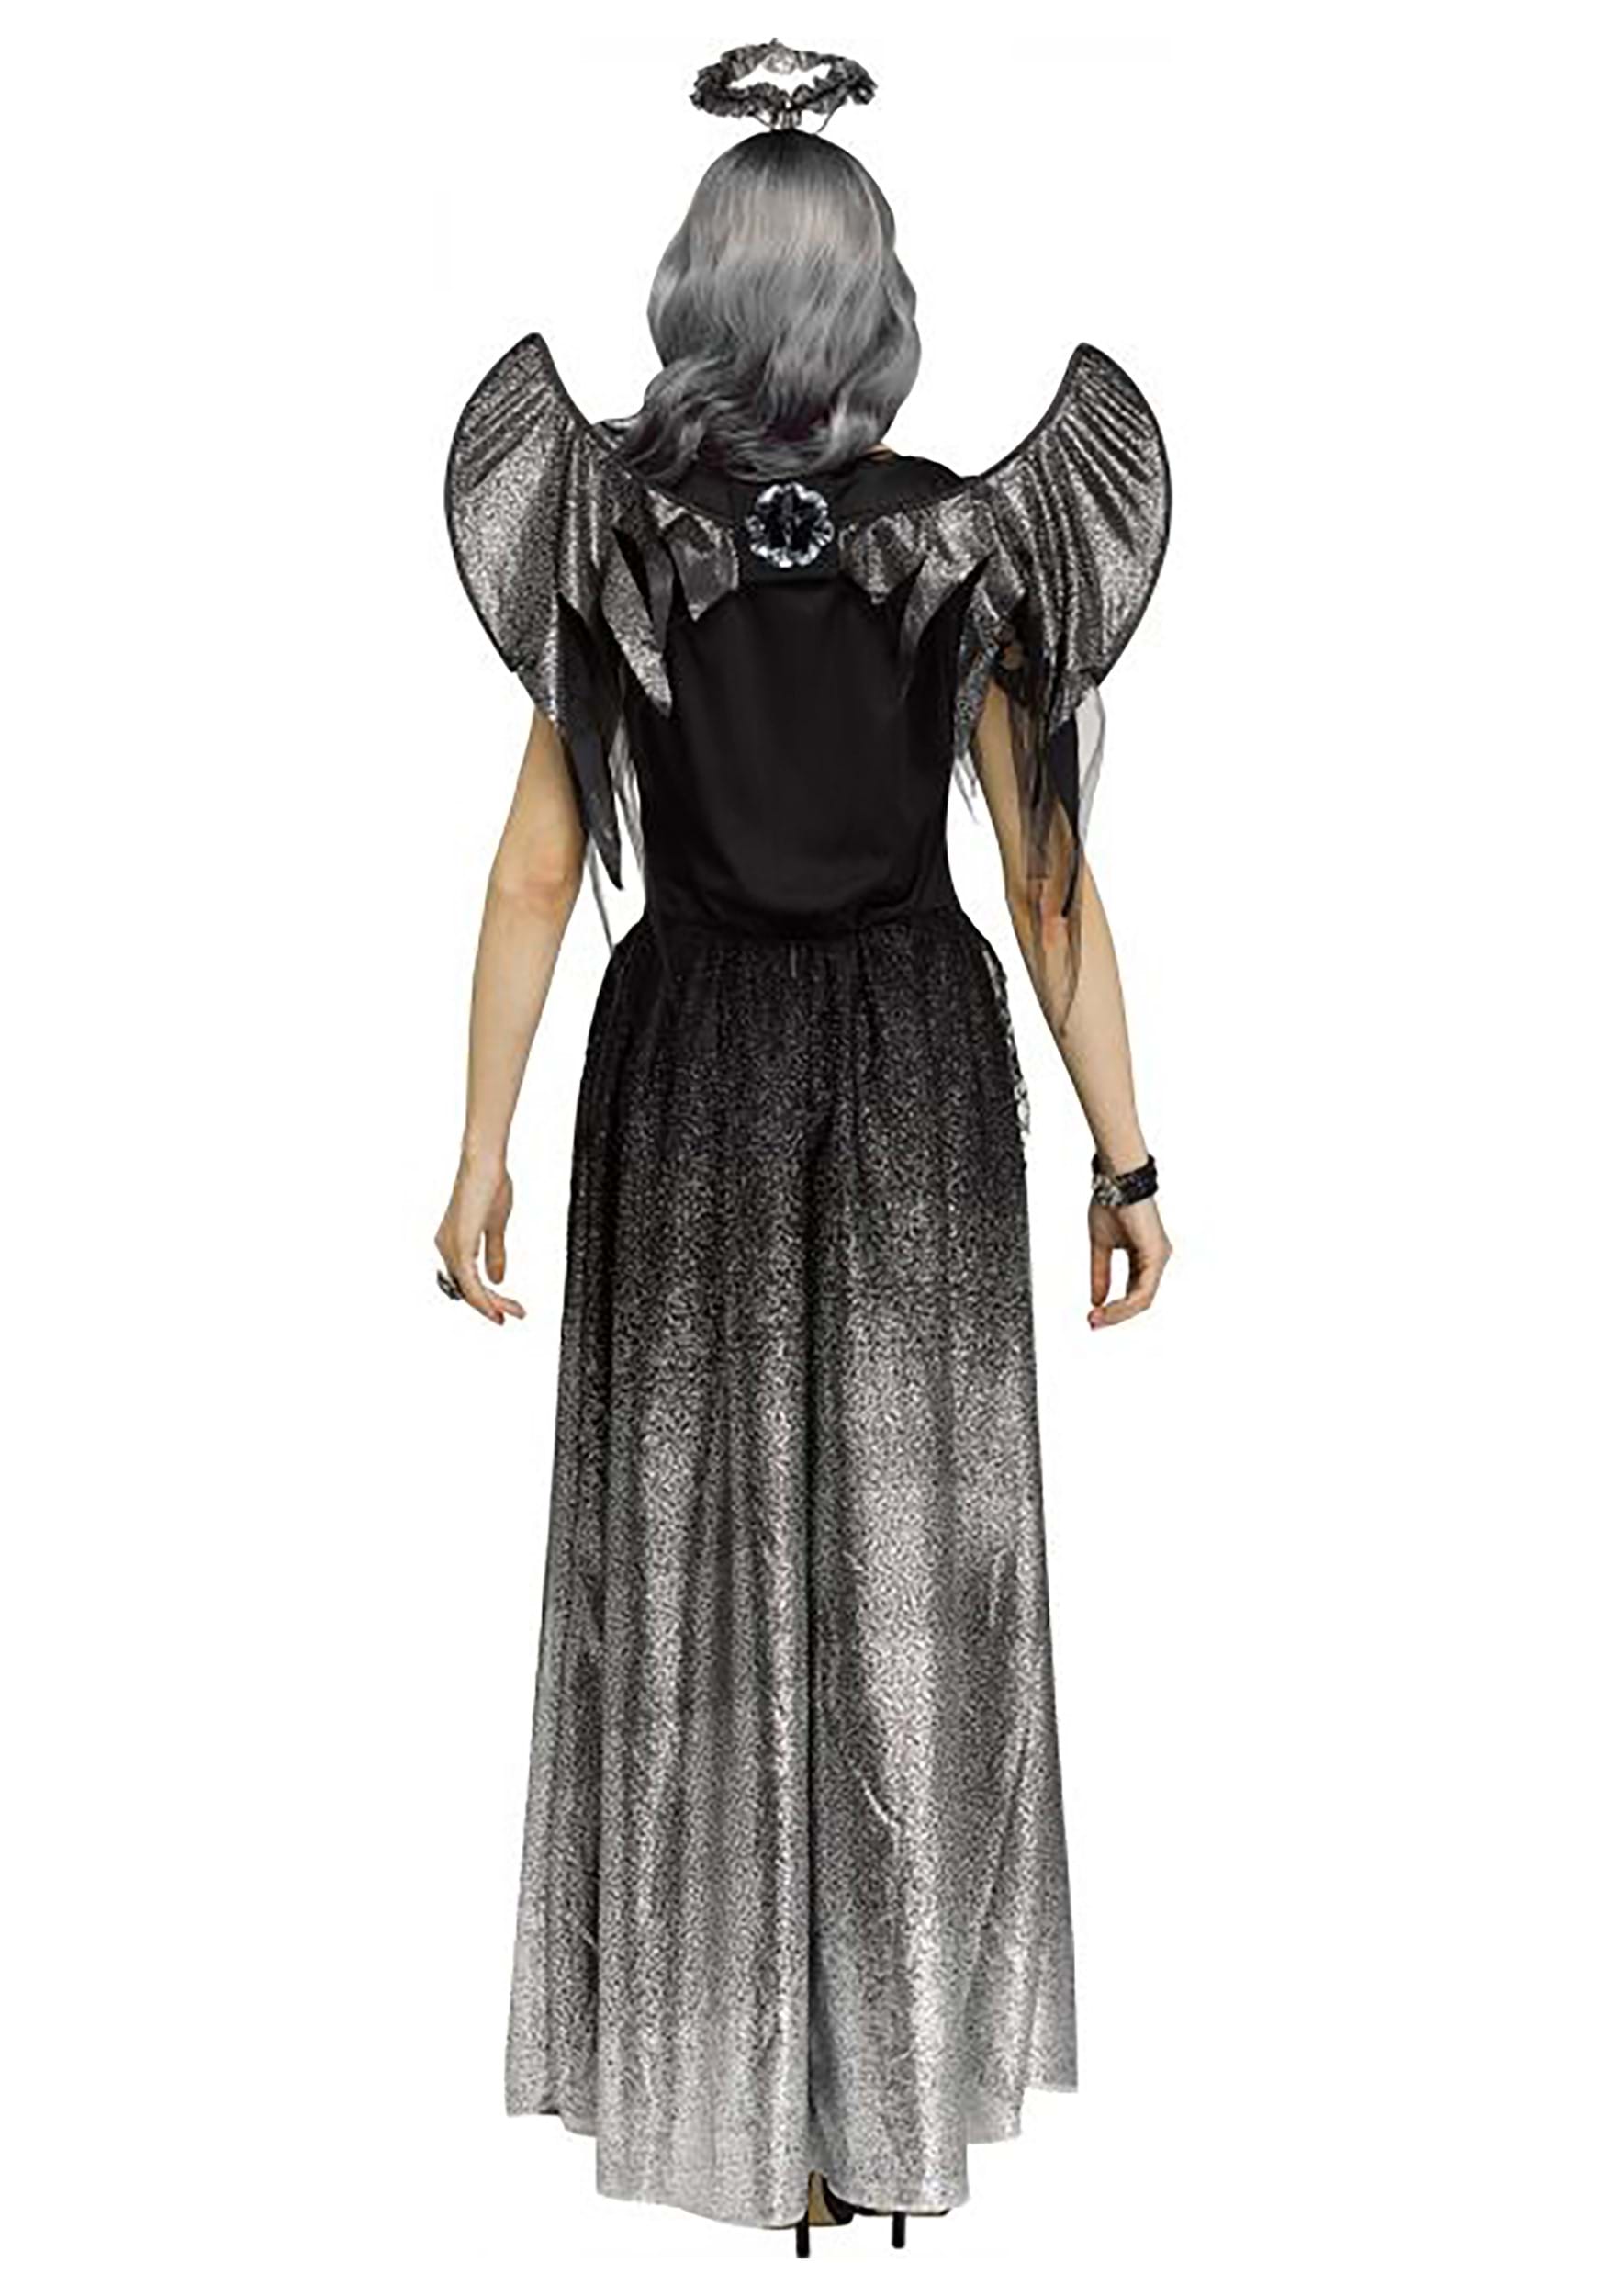 Onyx Angel Women's Costume